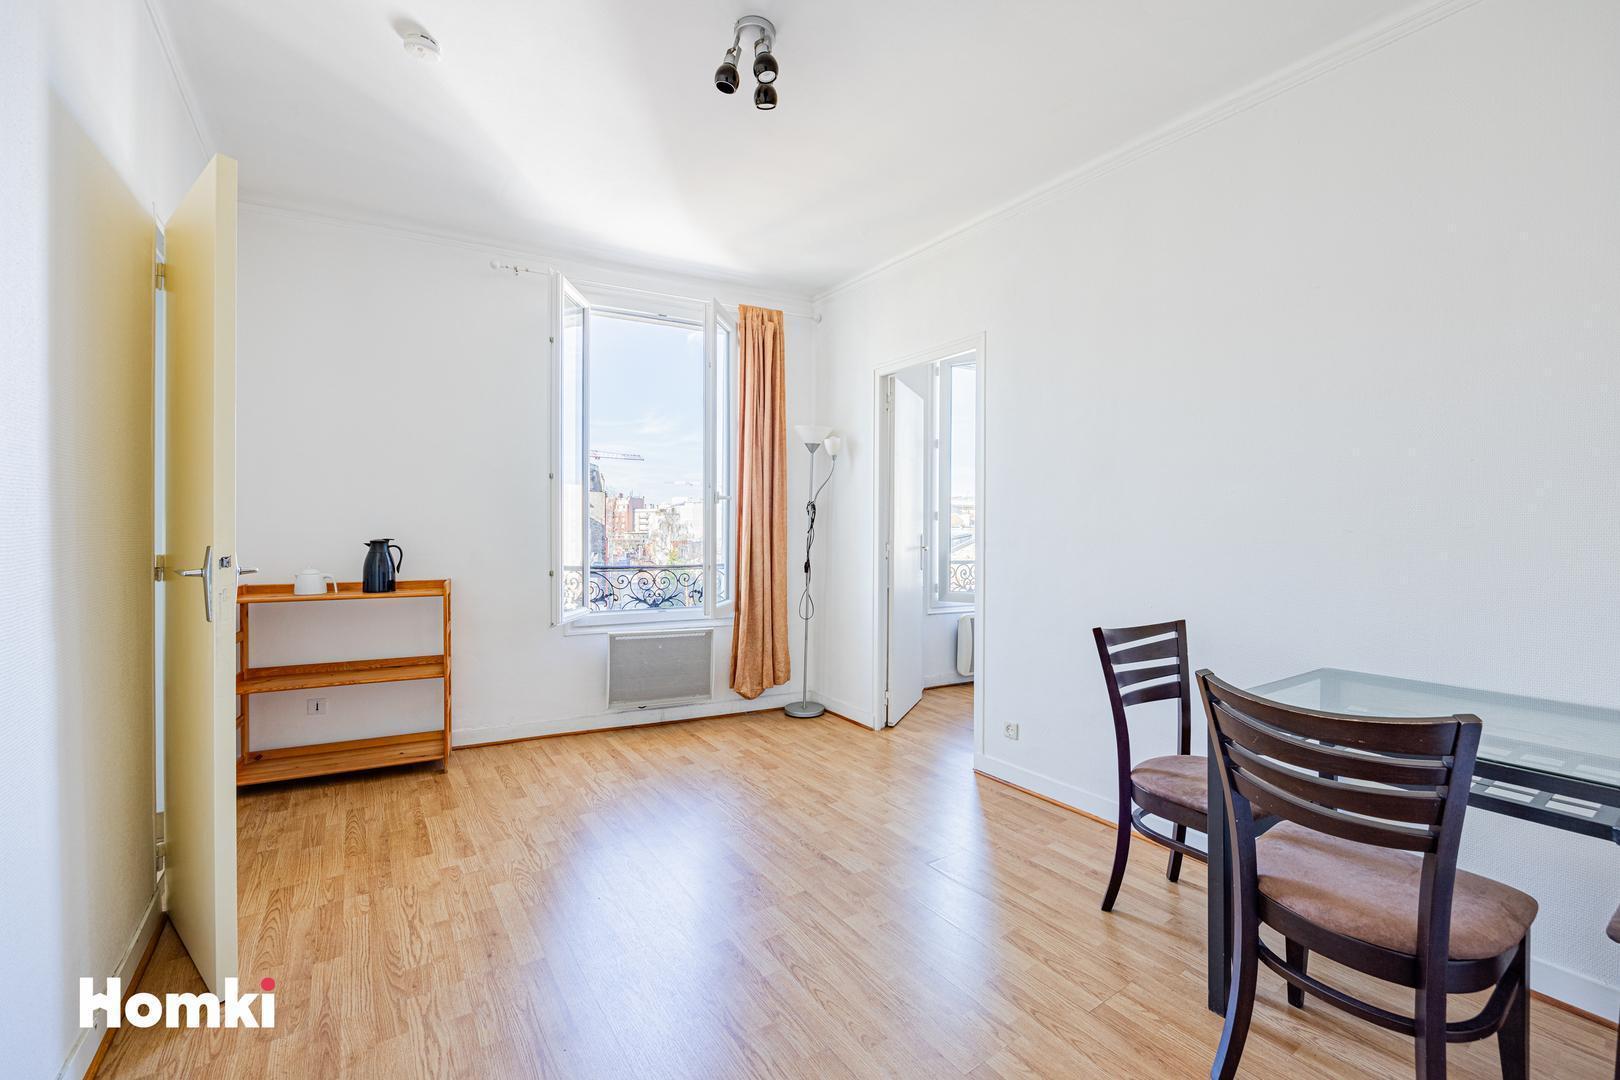 Homki - Vente Appartement  de 29.49 m² à Malakoff 92240